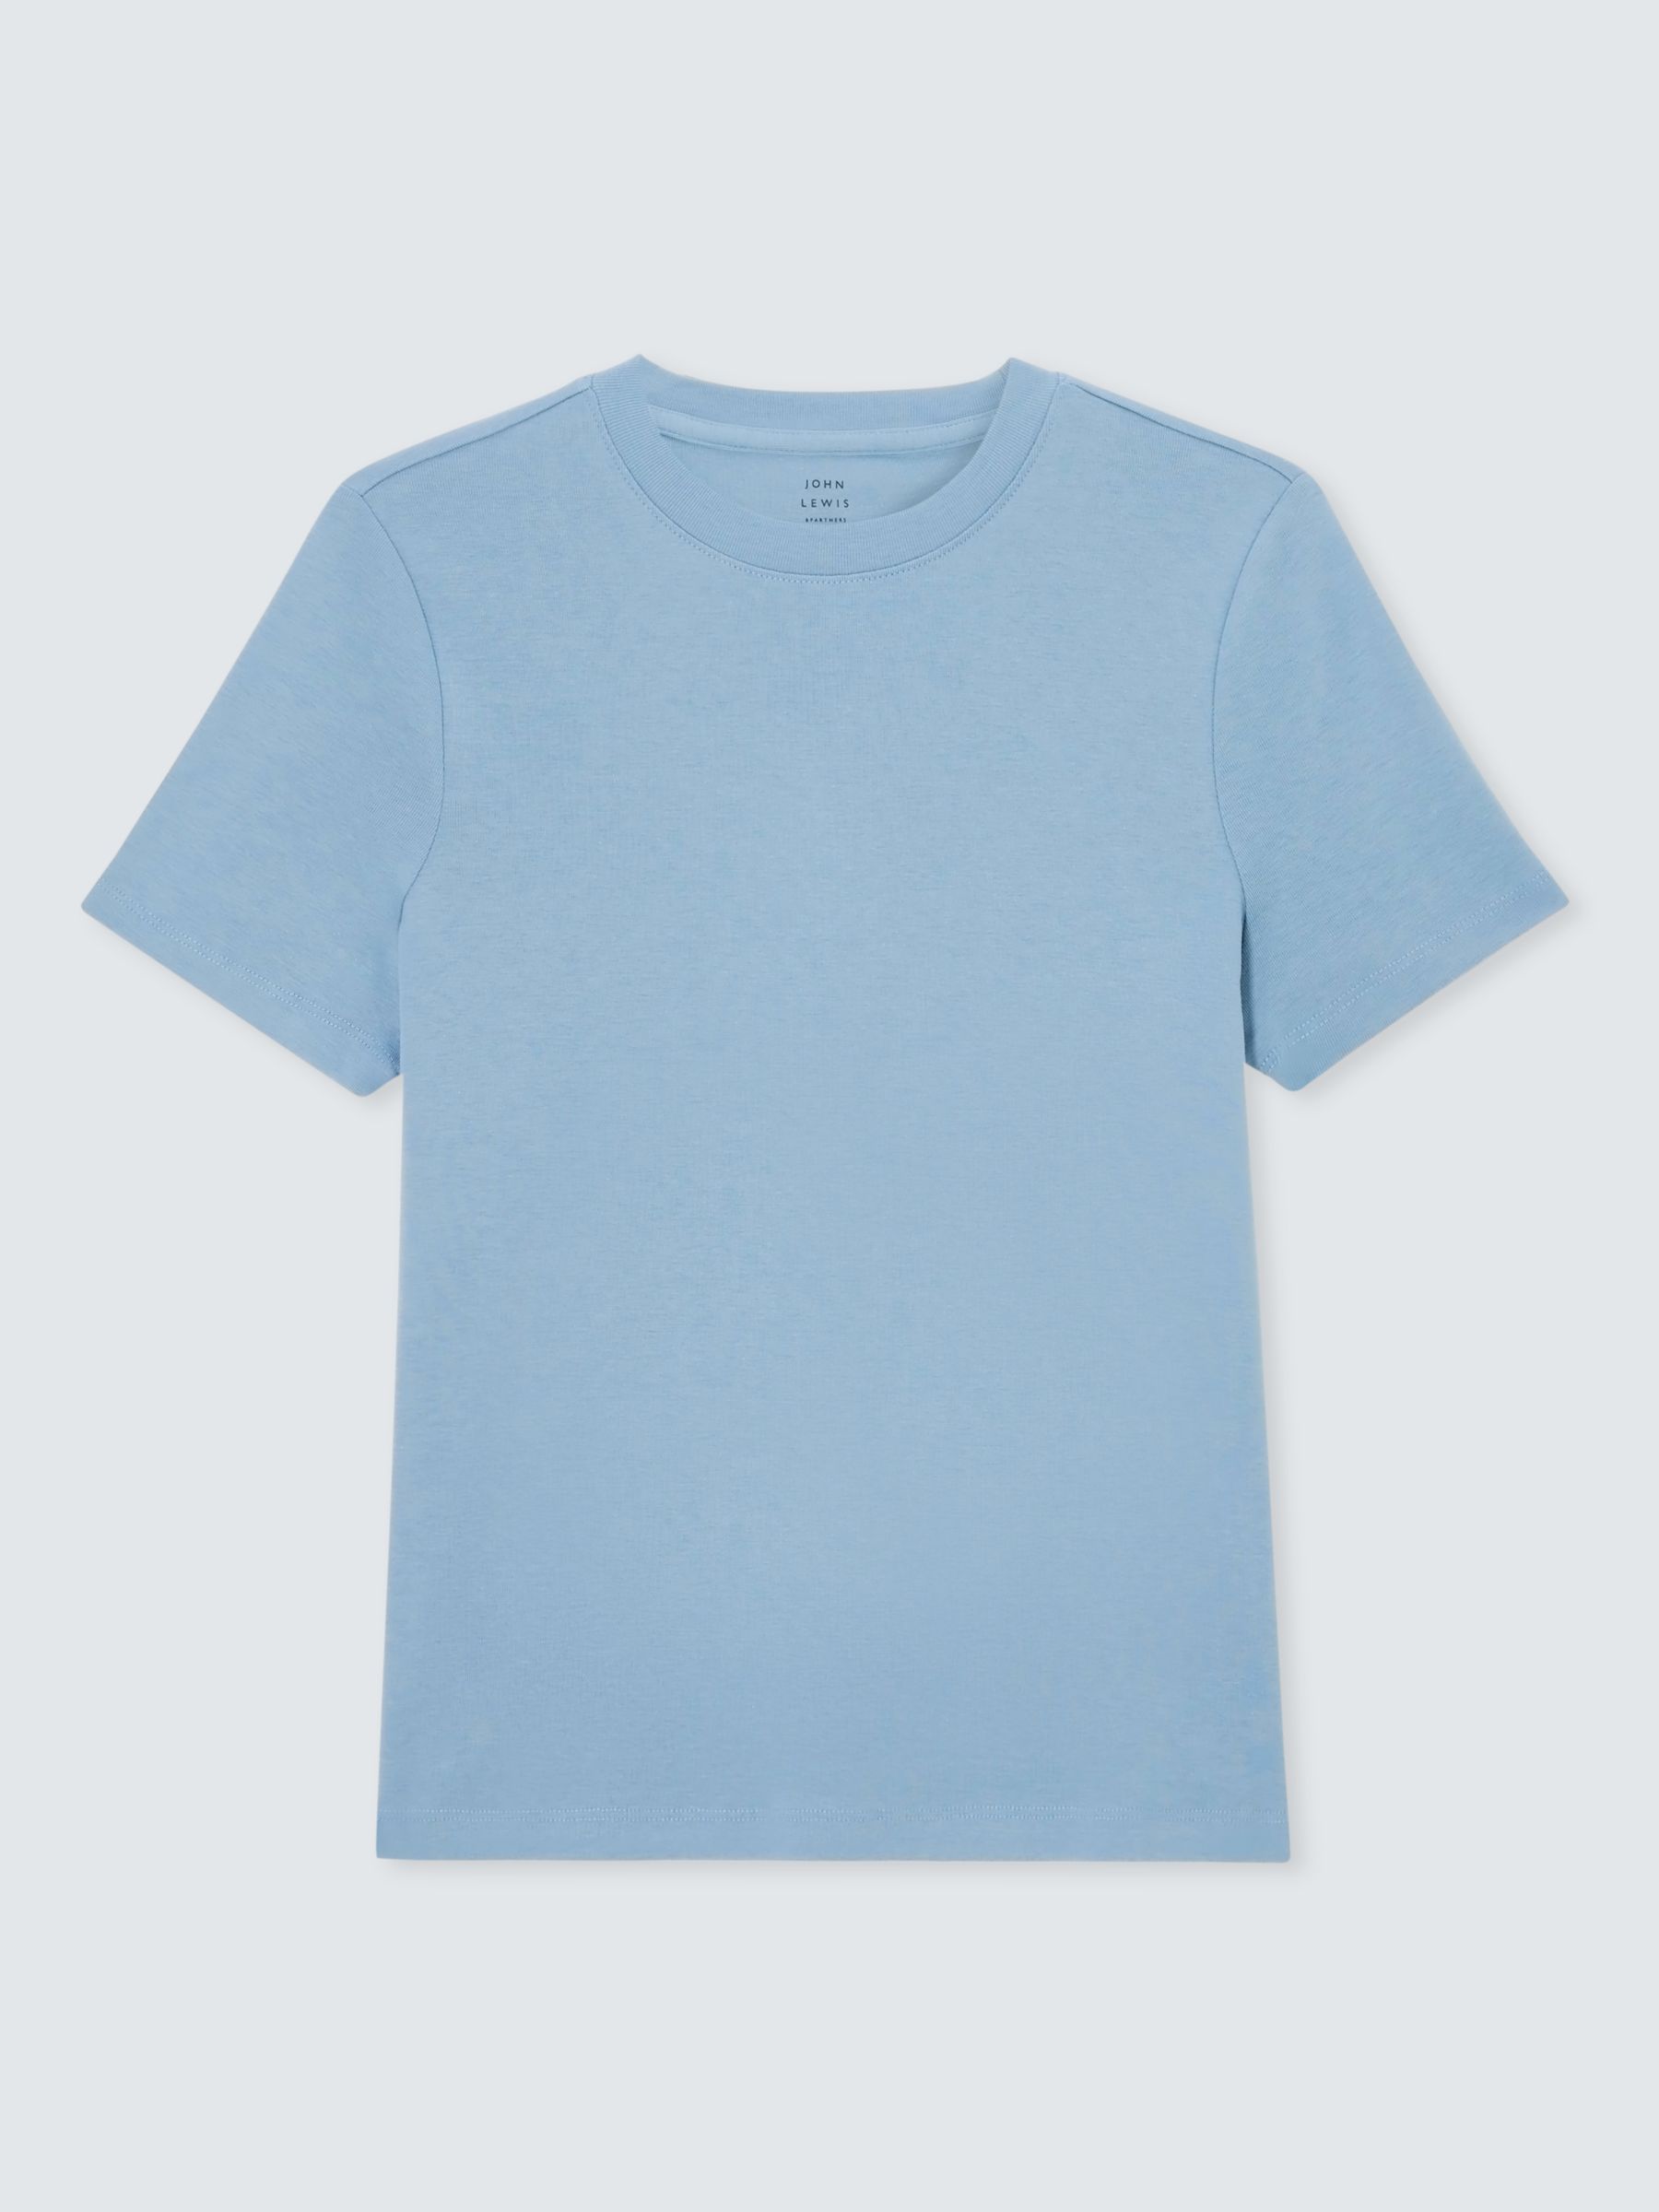 Buy John Lewis Organic Cotton Short Sleeve Crew Neck T-Shirt Online at johnlewis.com